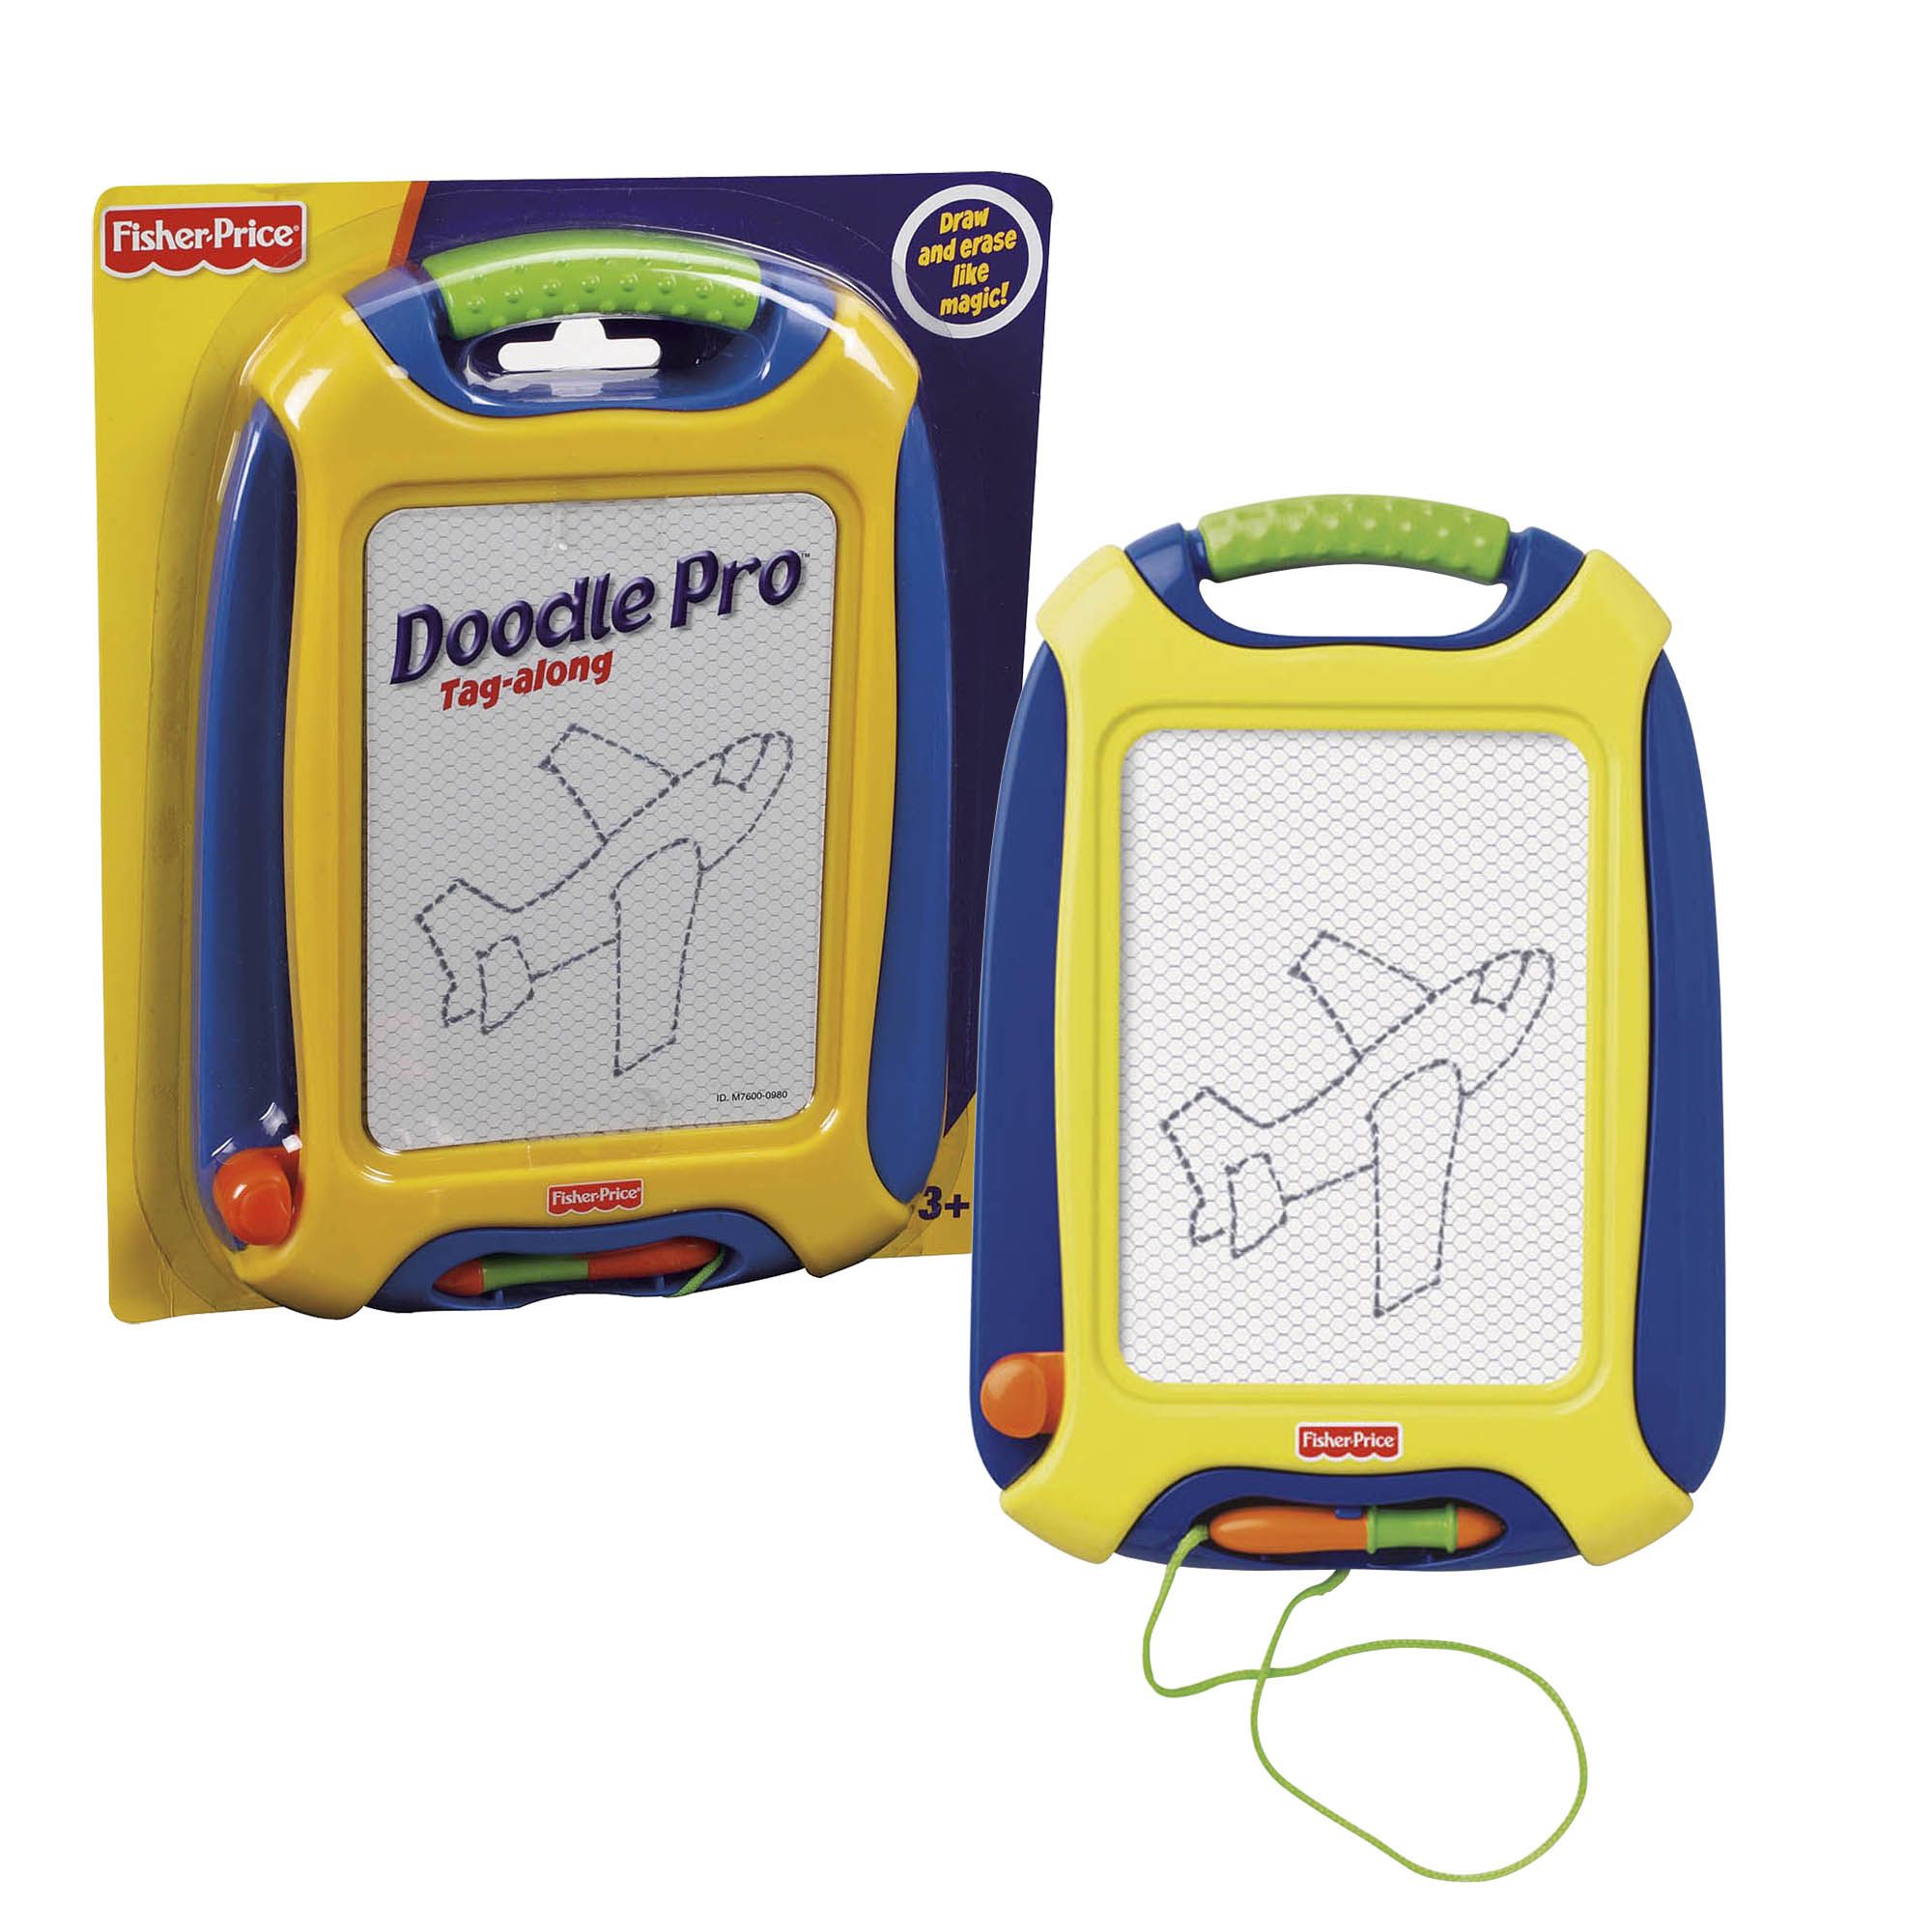 FisherPrice Doodle Pro TagAlong Purple Toys & Games